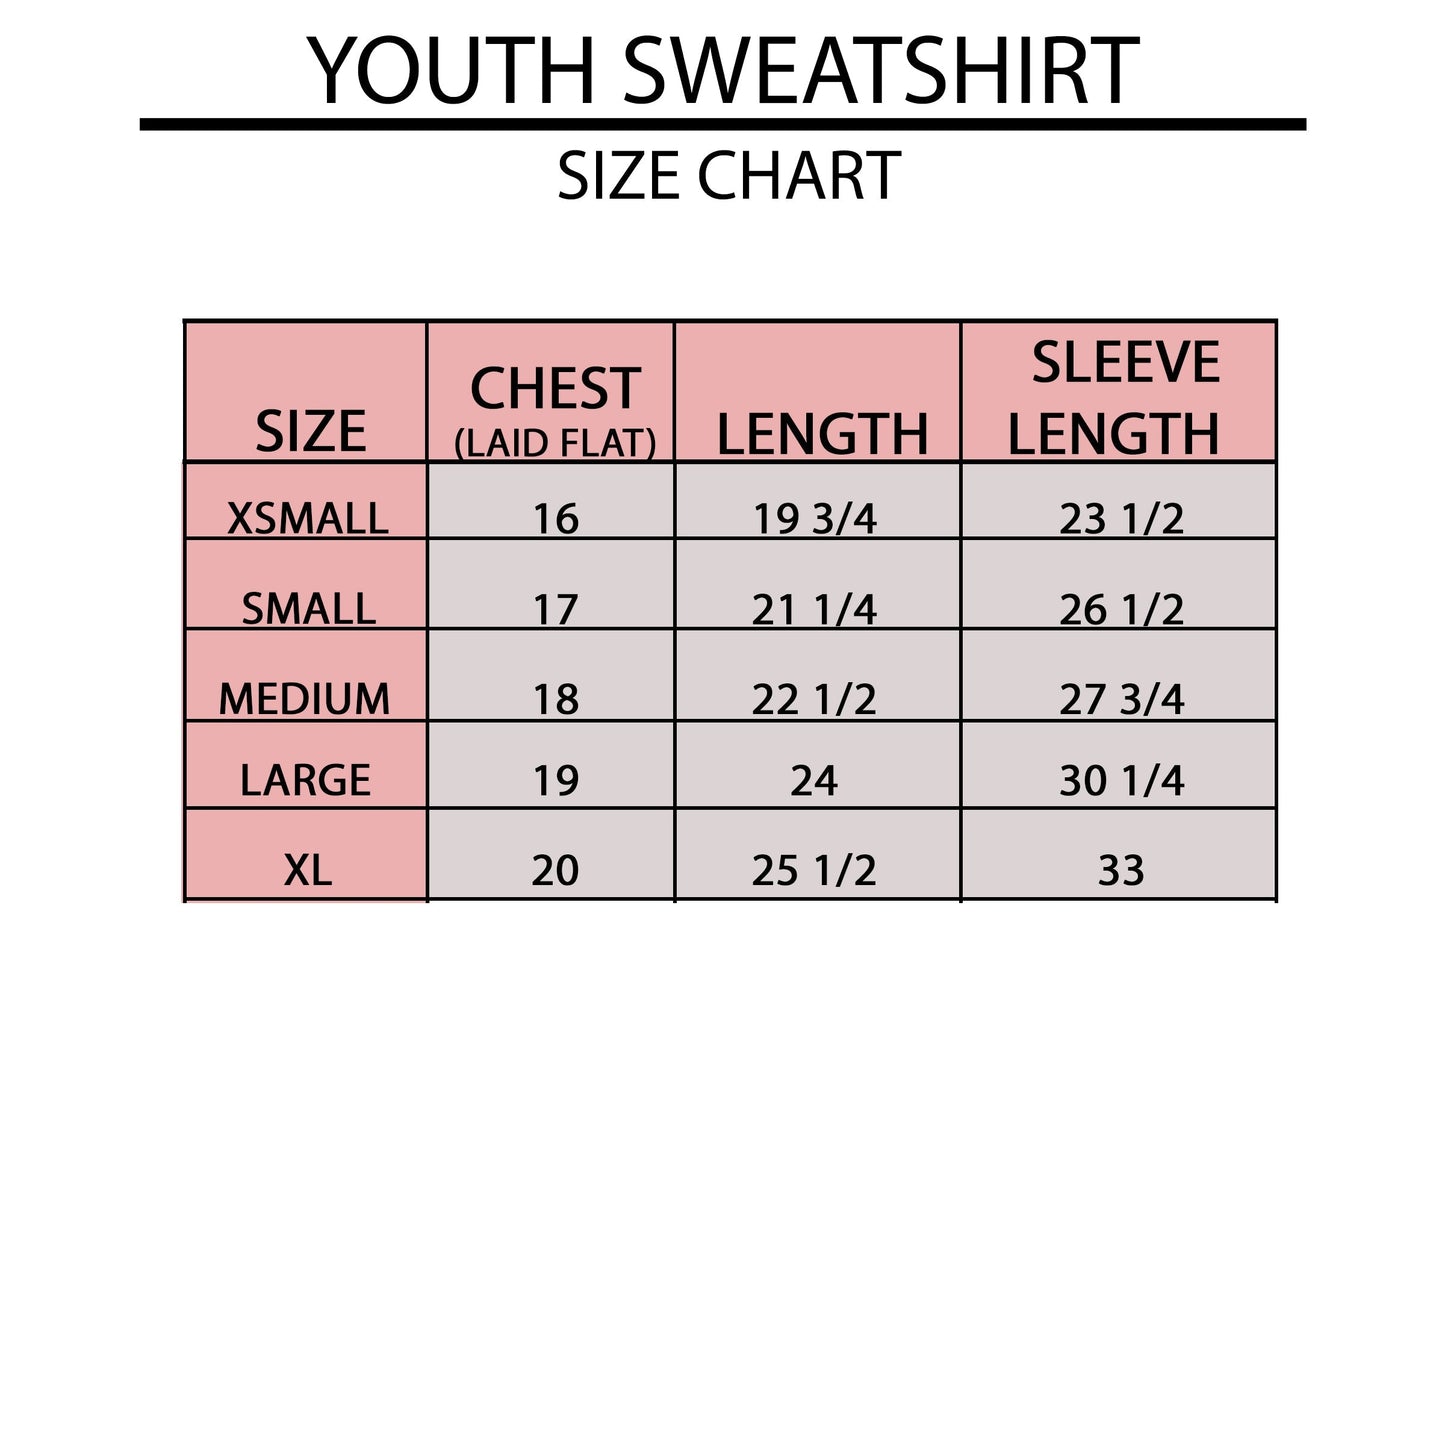 Geometric Moose | Youth Sweatshirt